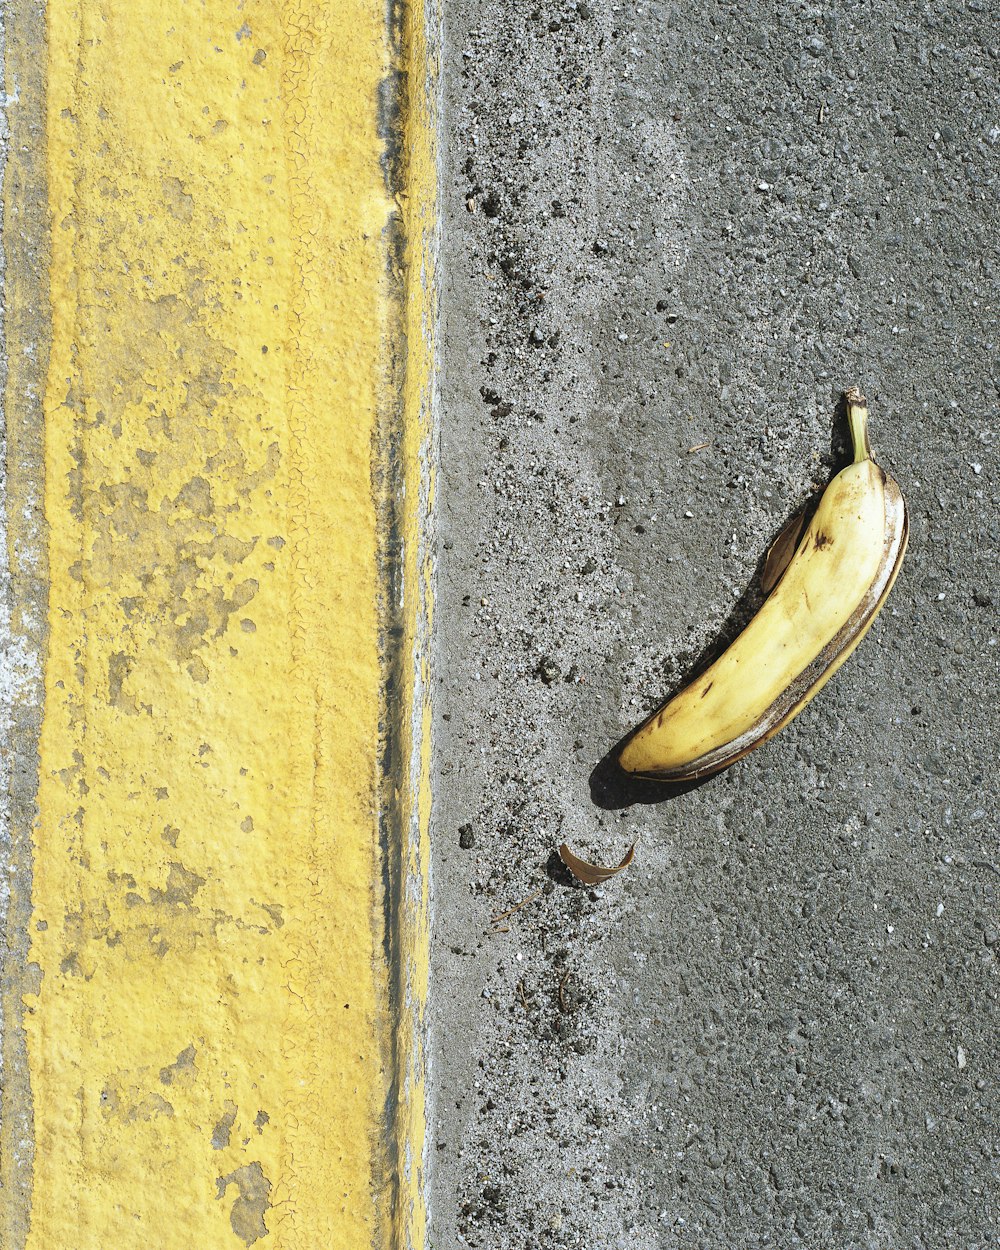 banana peel on the road